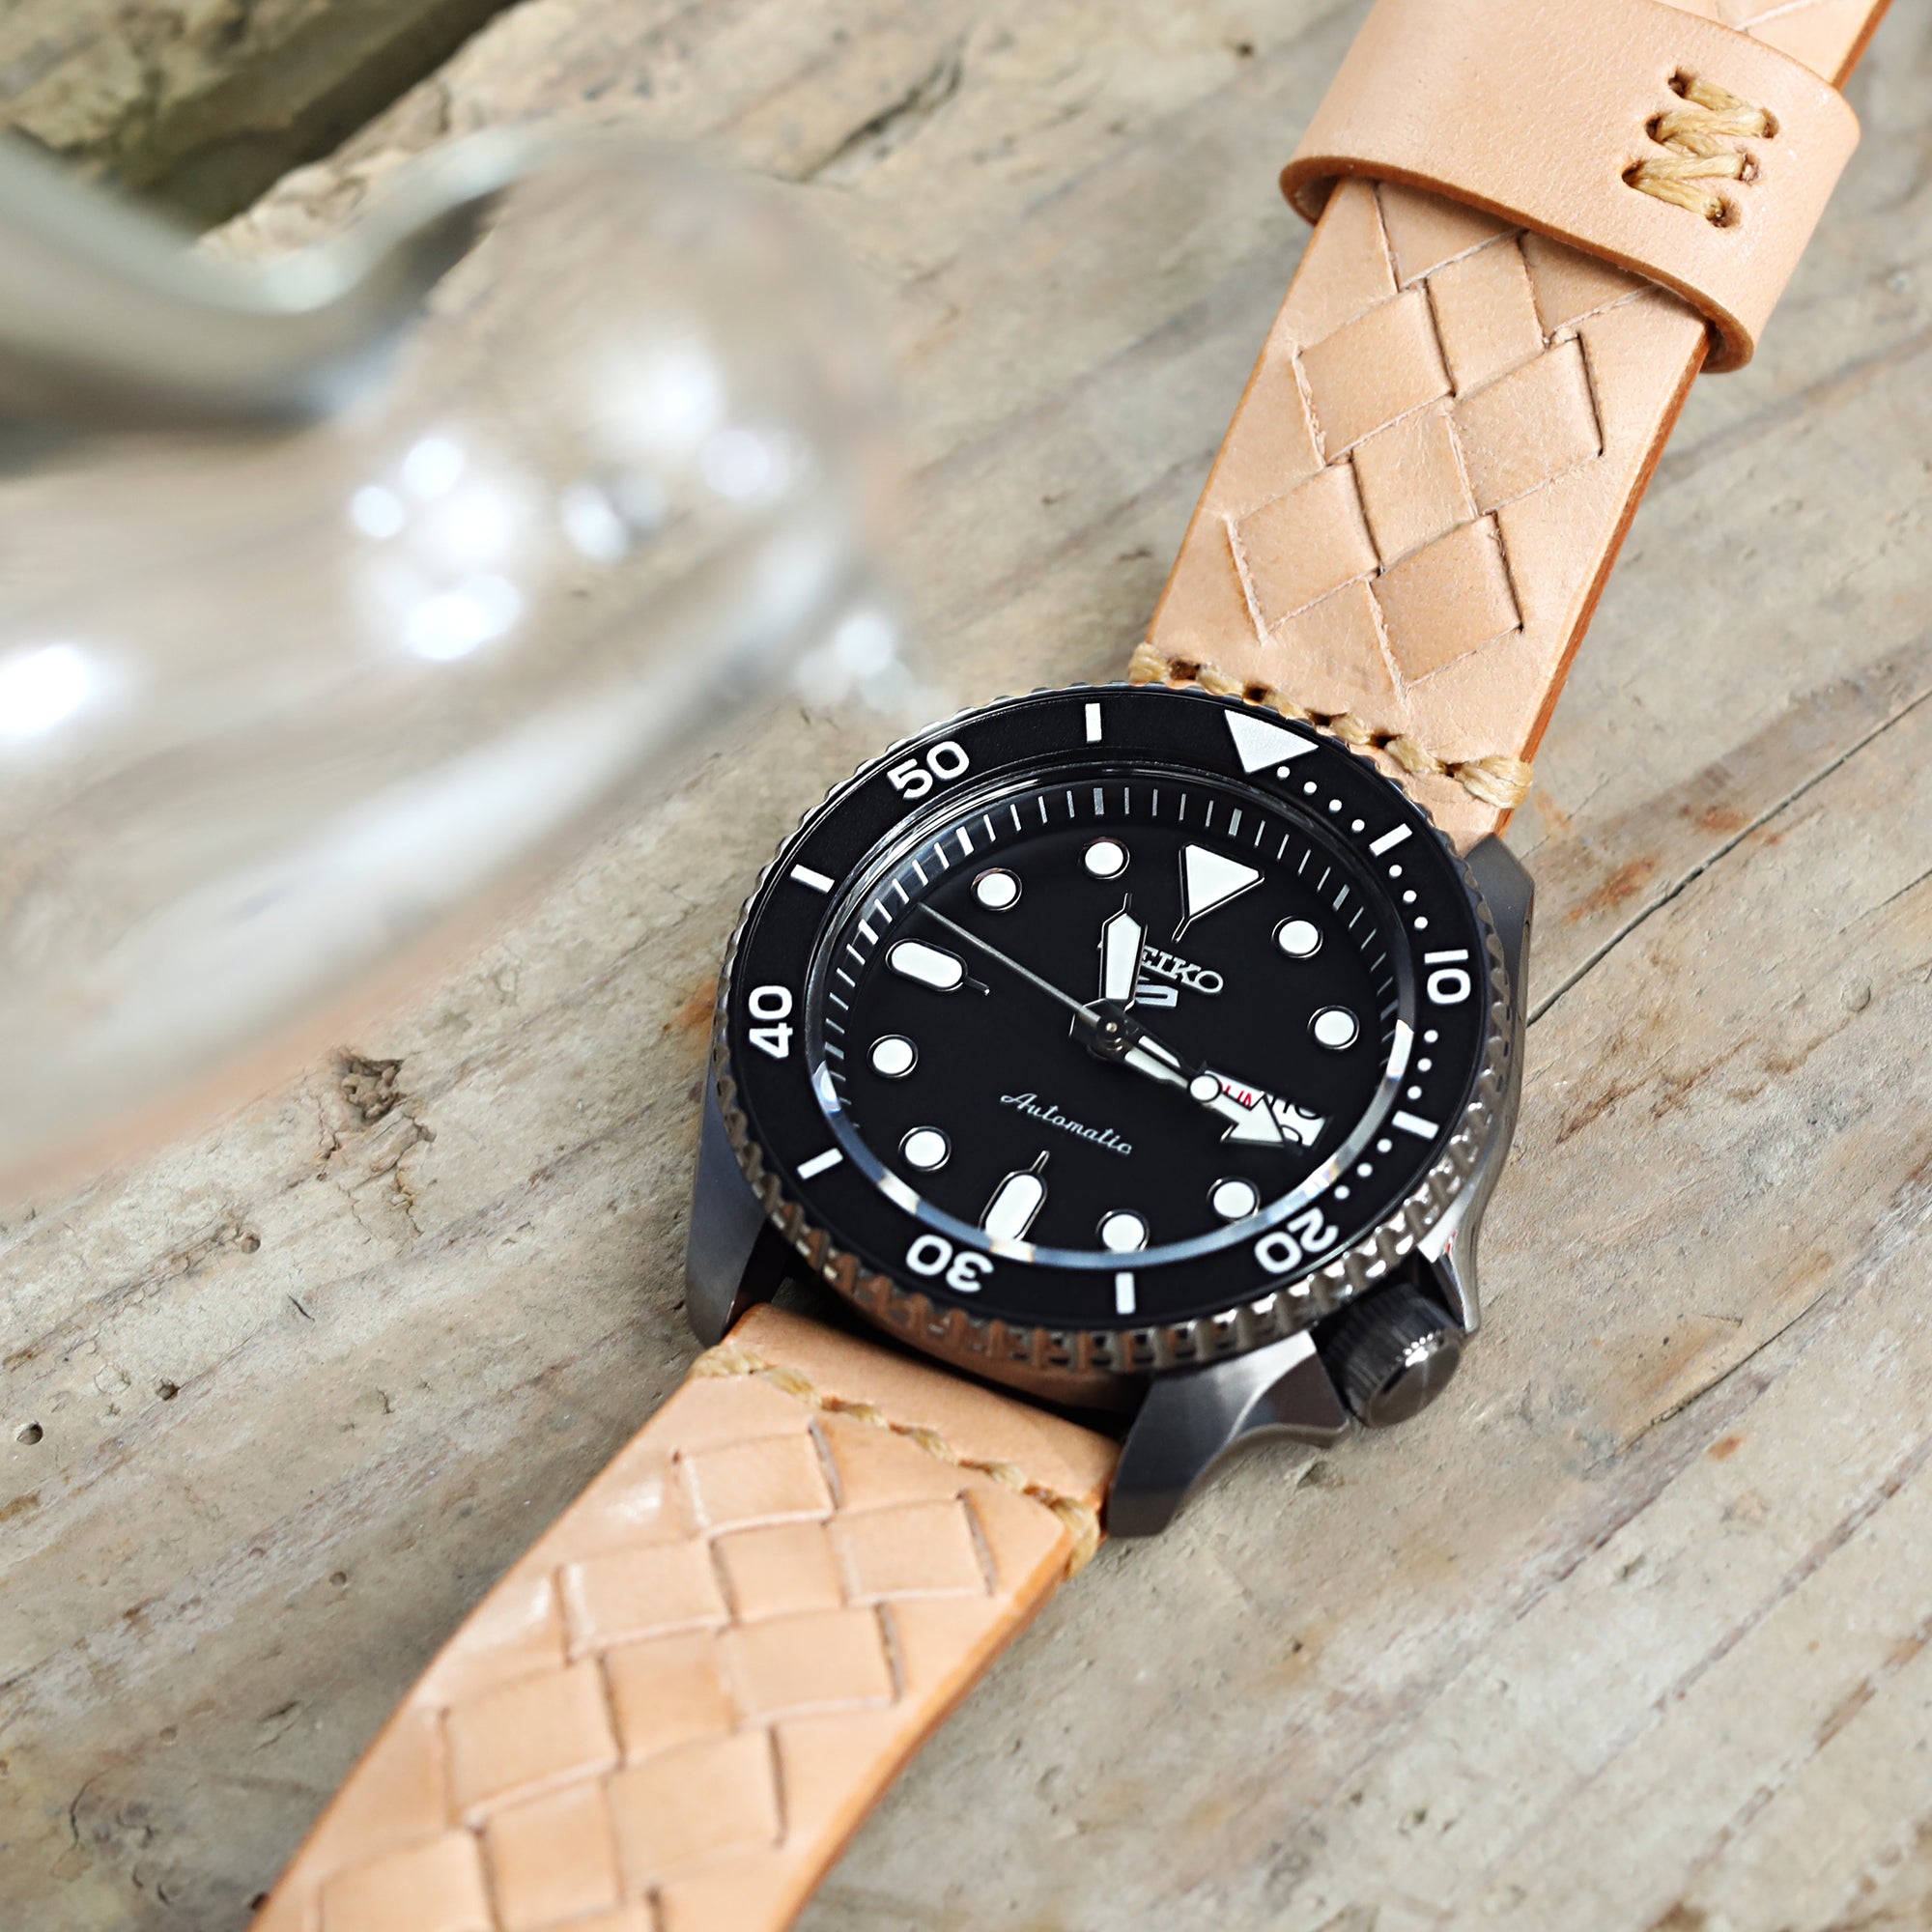 Why choose an alligator skin watch strap - Strapcode